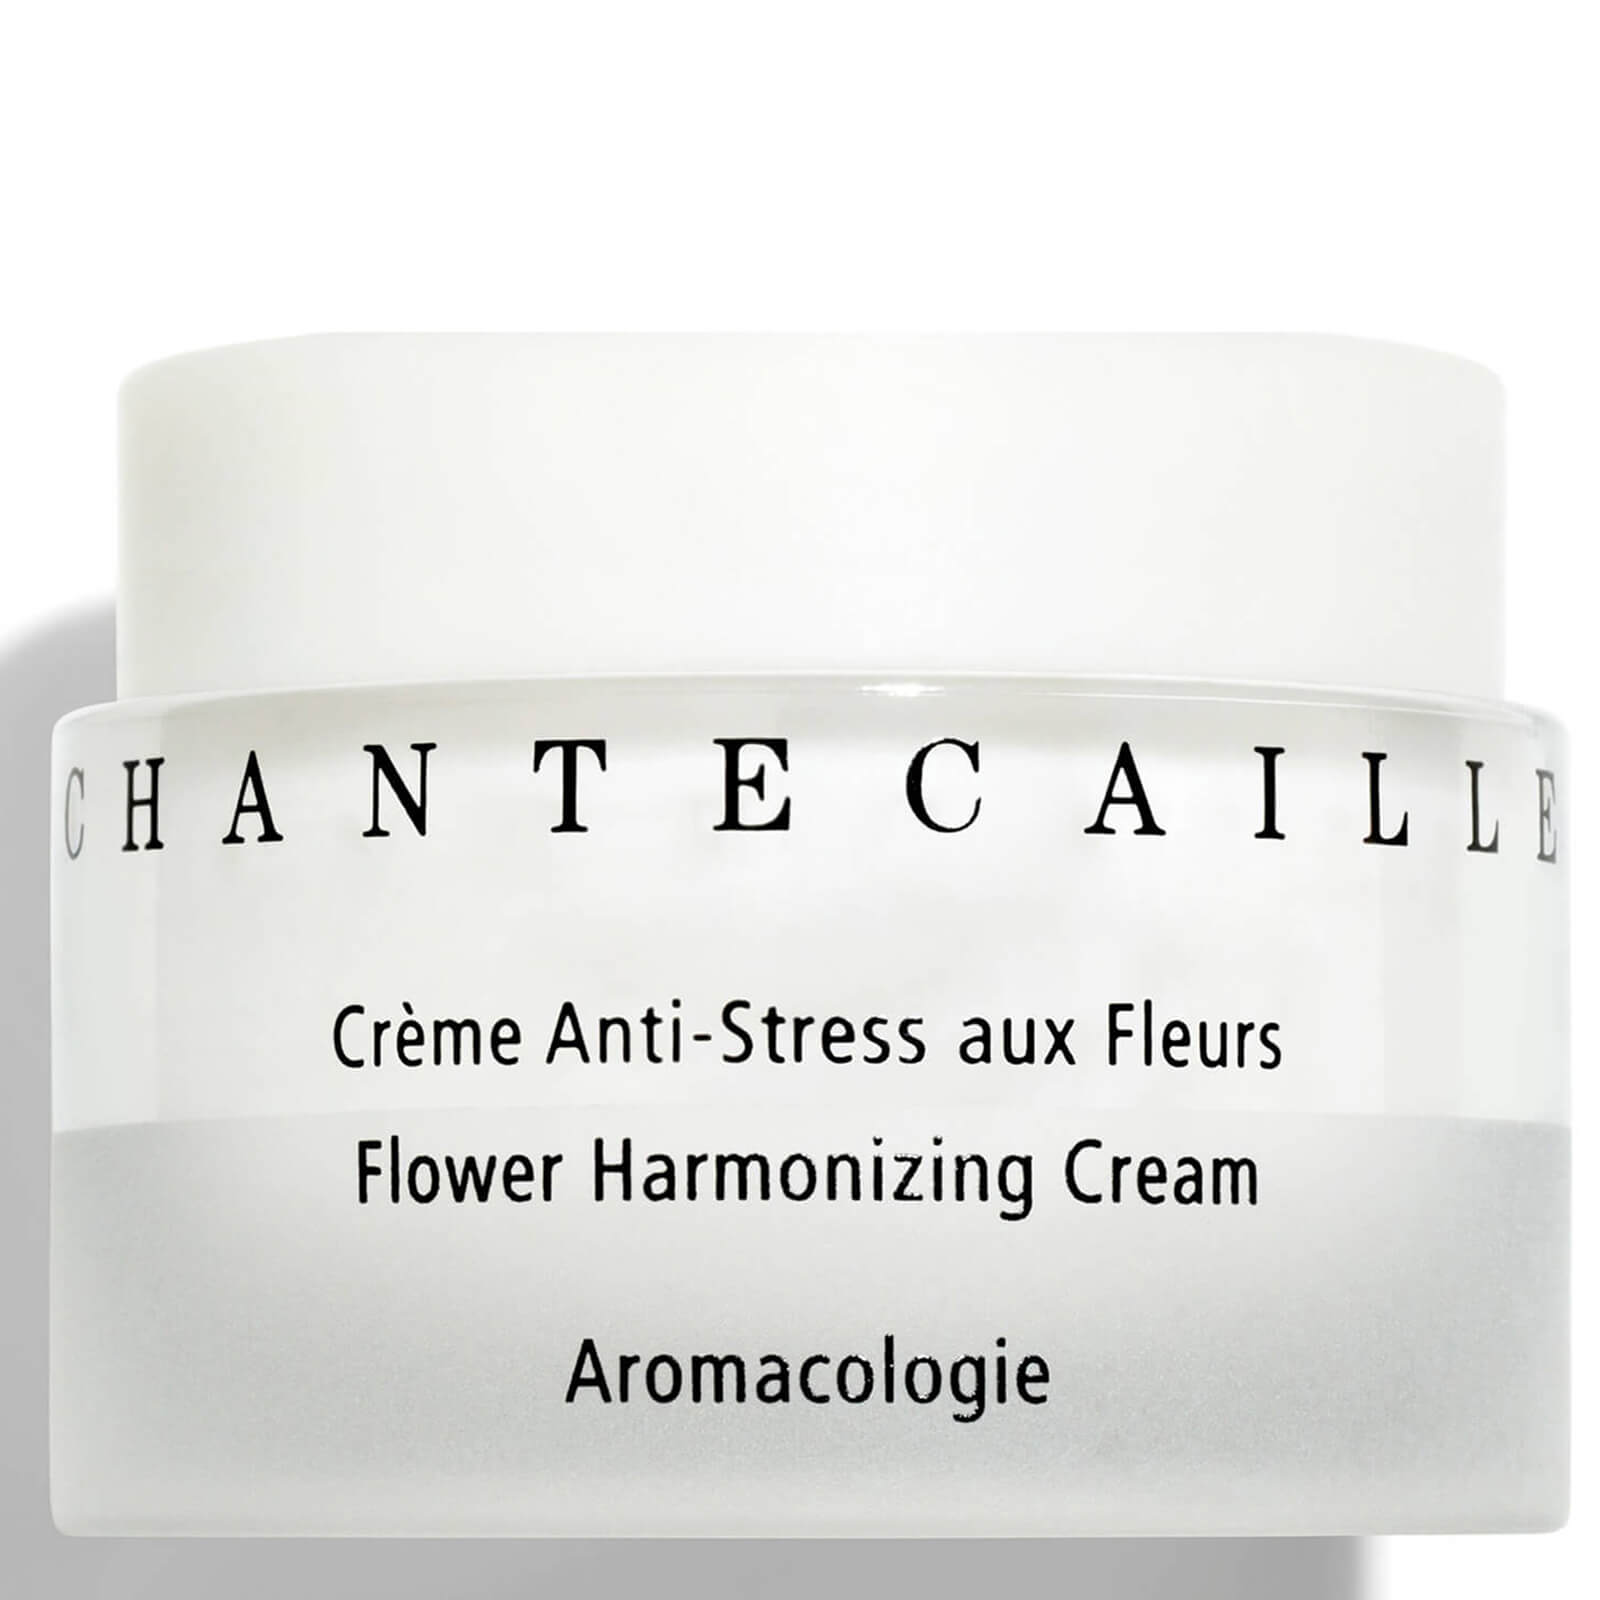 Chantecaille Flower Harmonizing Cream 50ml